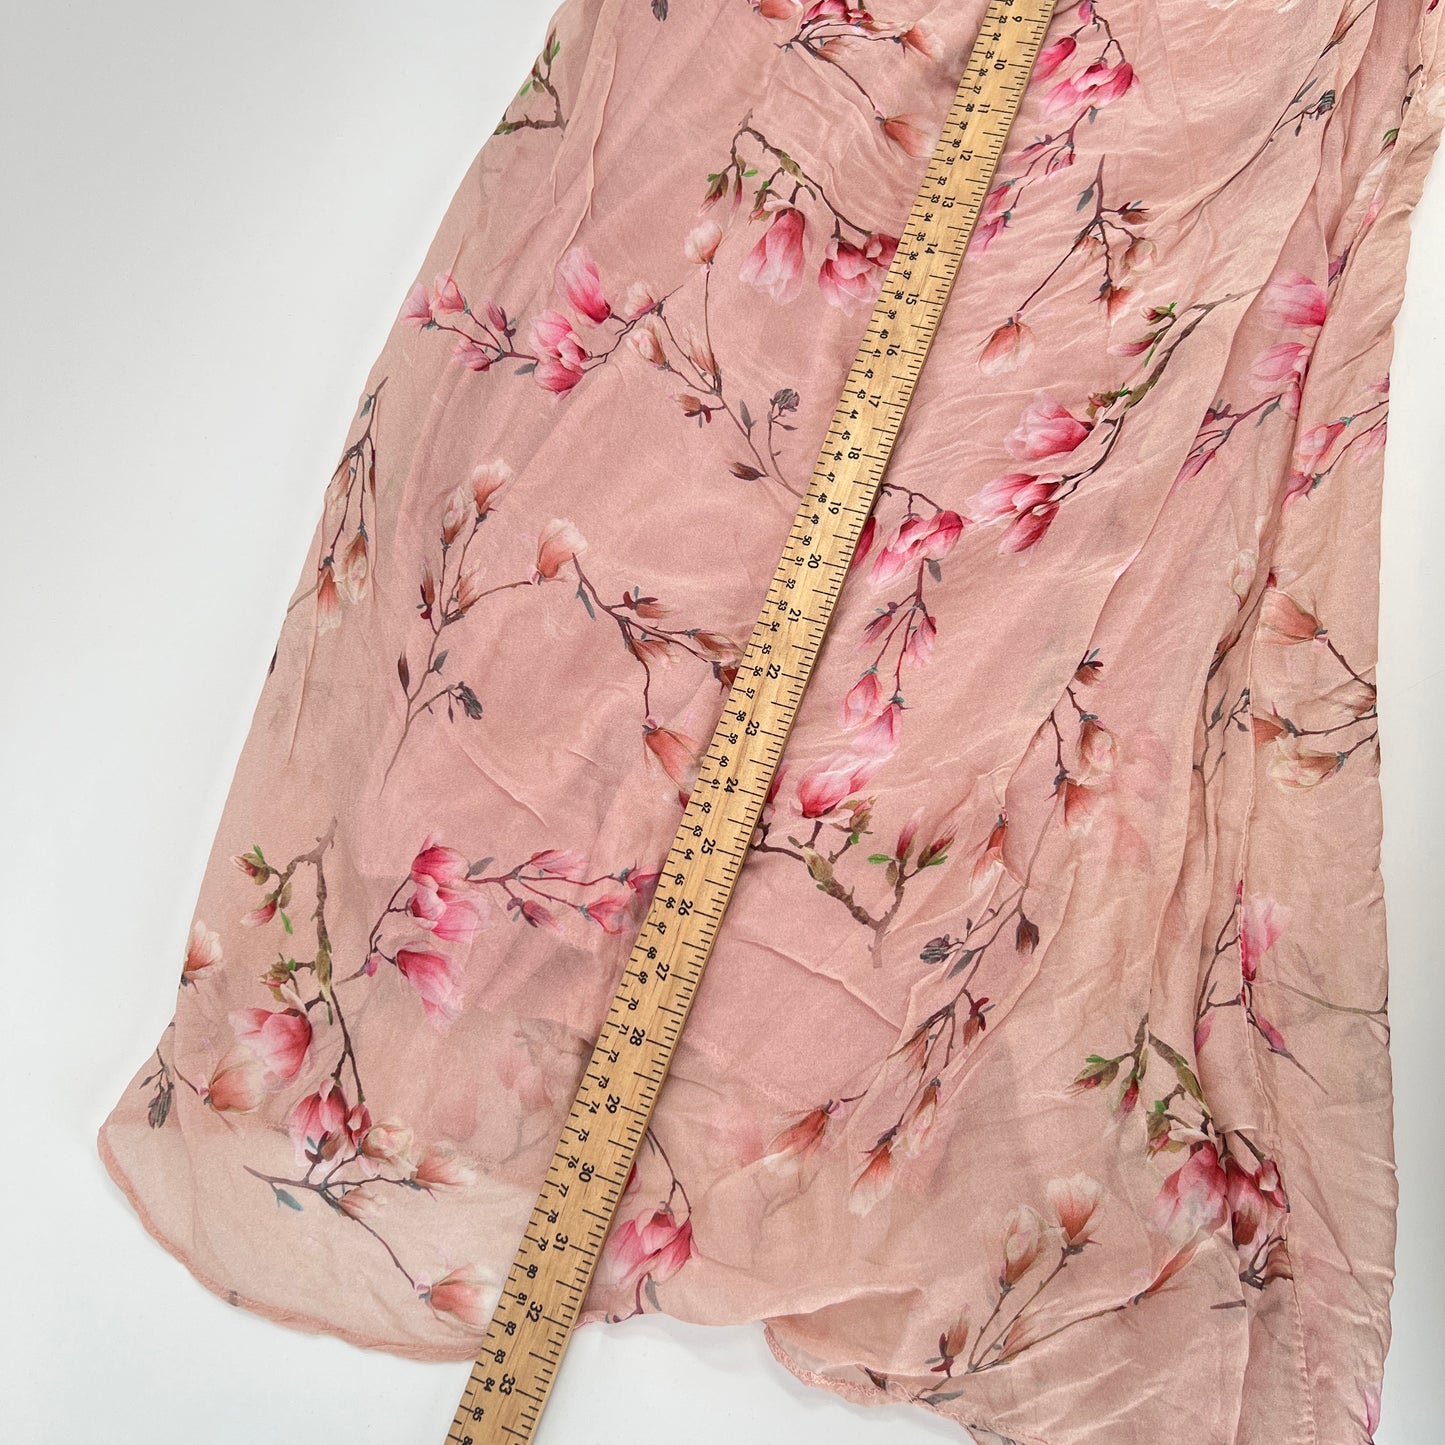 SOLD - Rosemarine Floral Tunic Mini Dress M